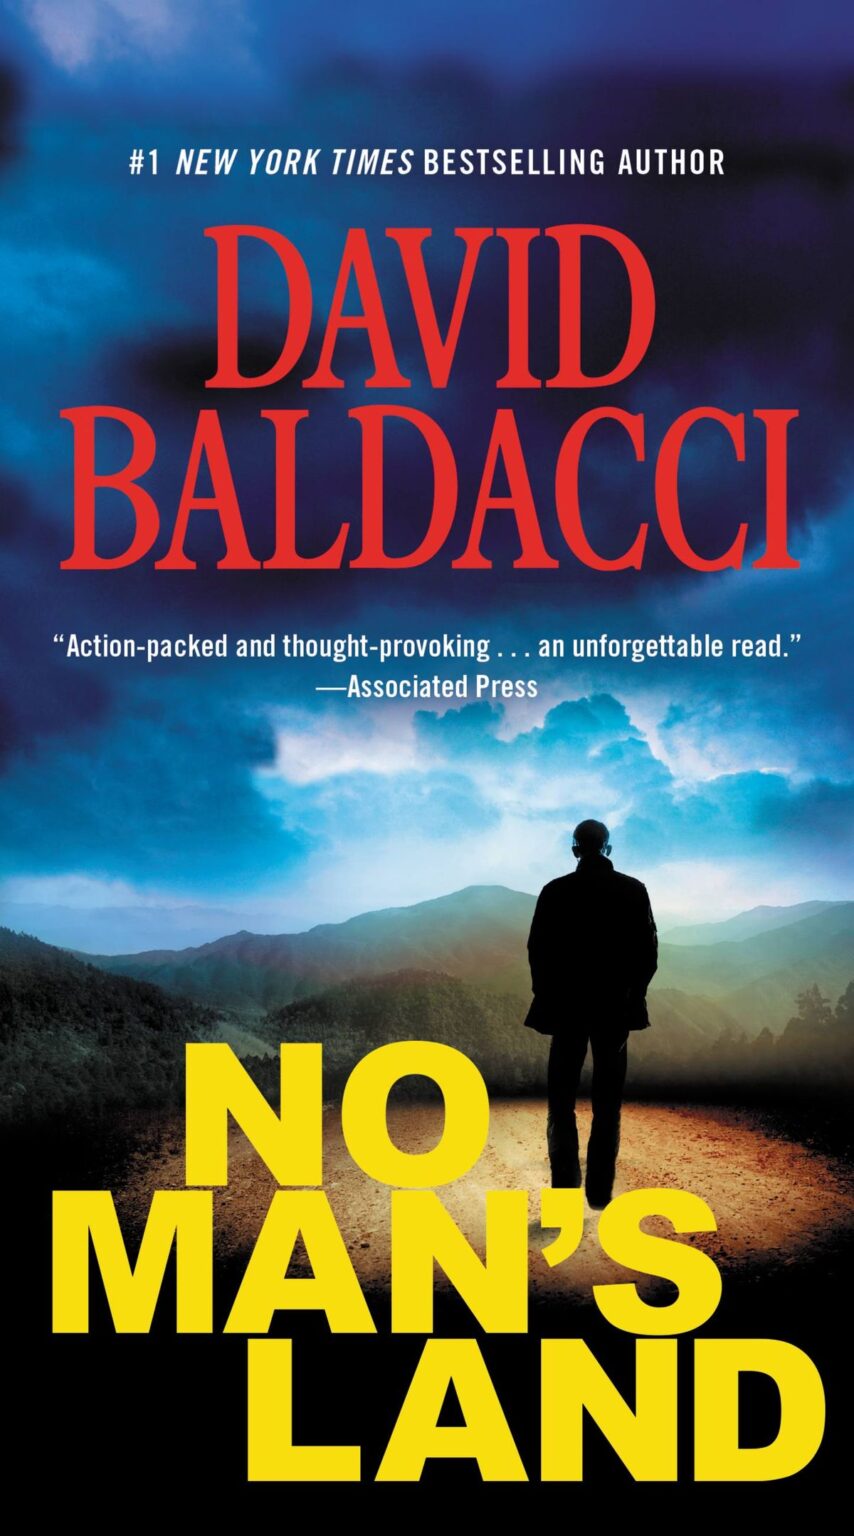 The Full List of David Baldacci Books